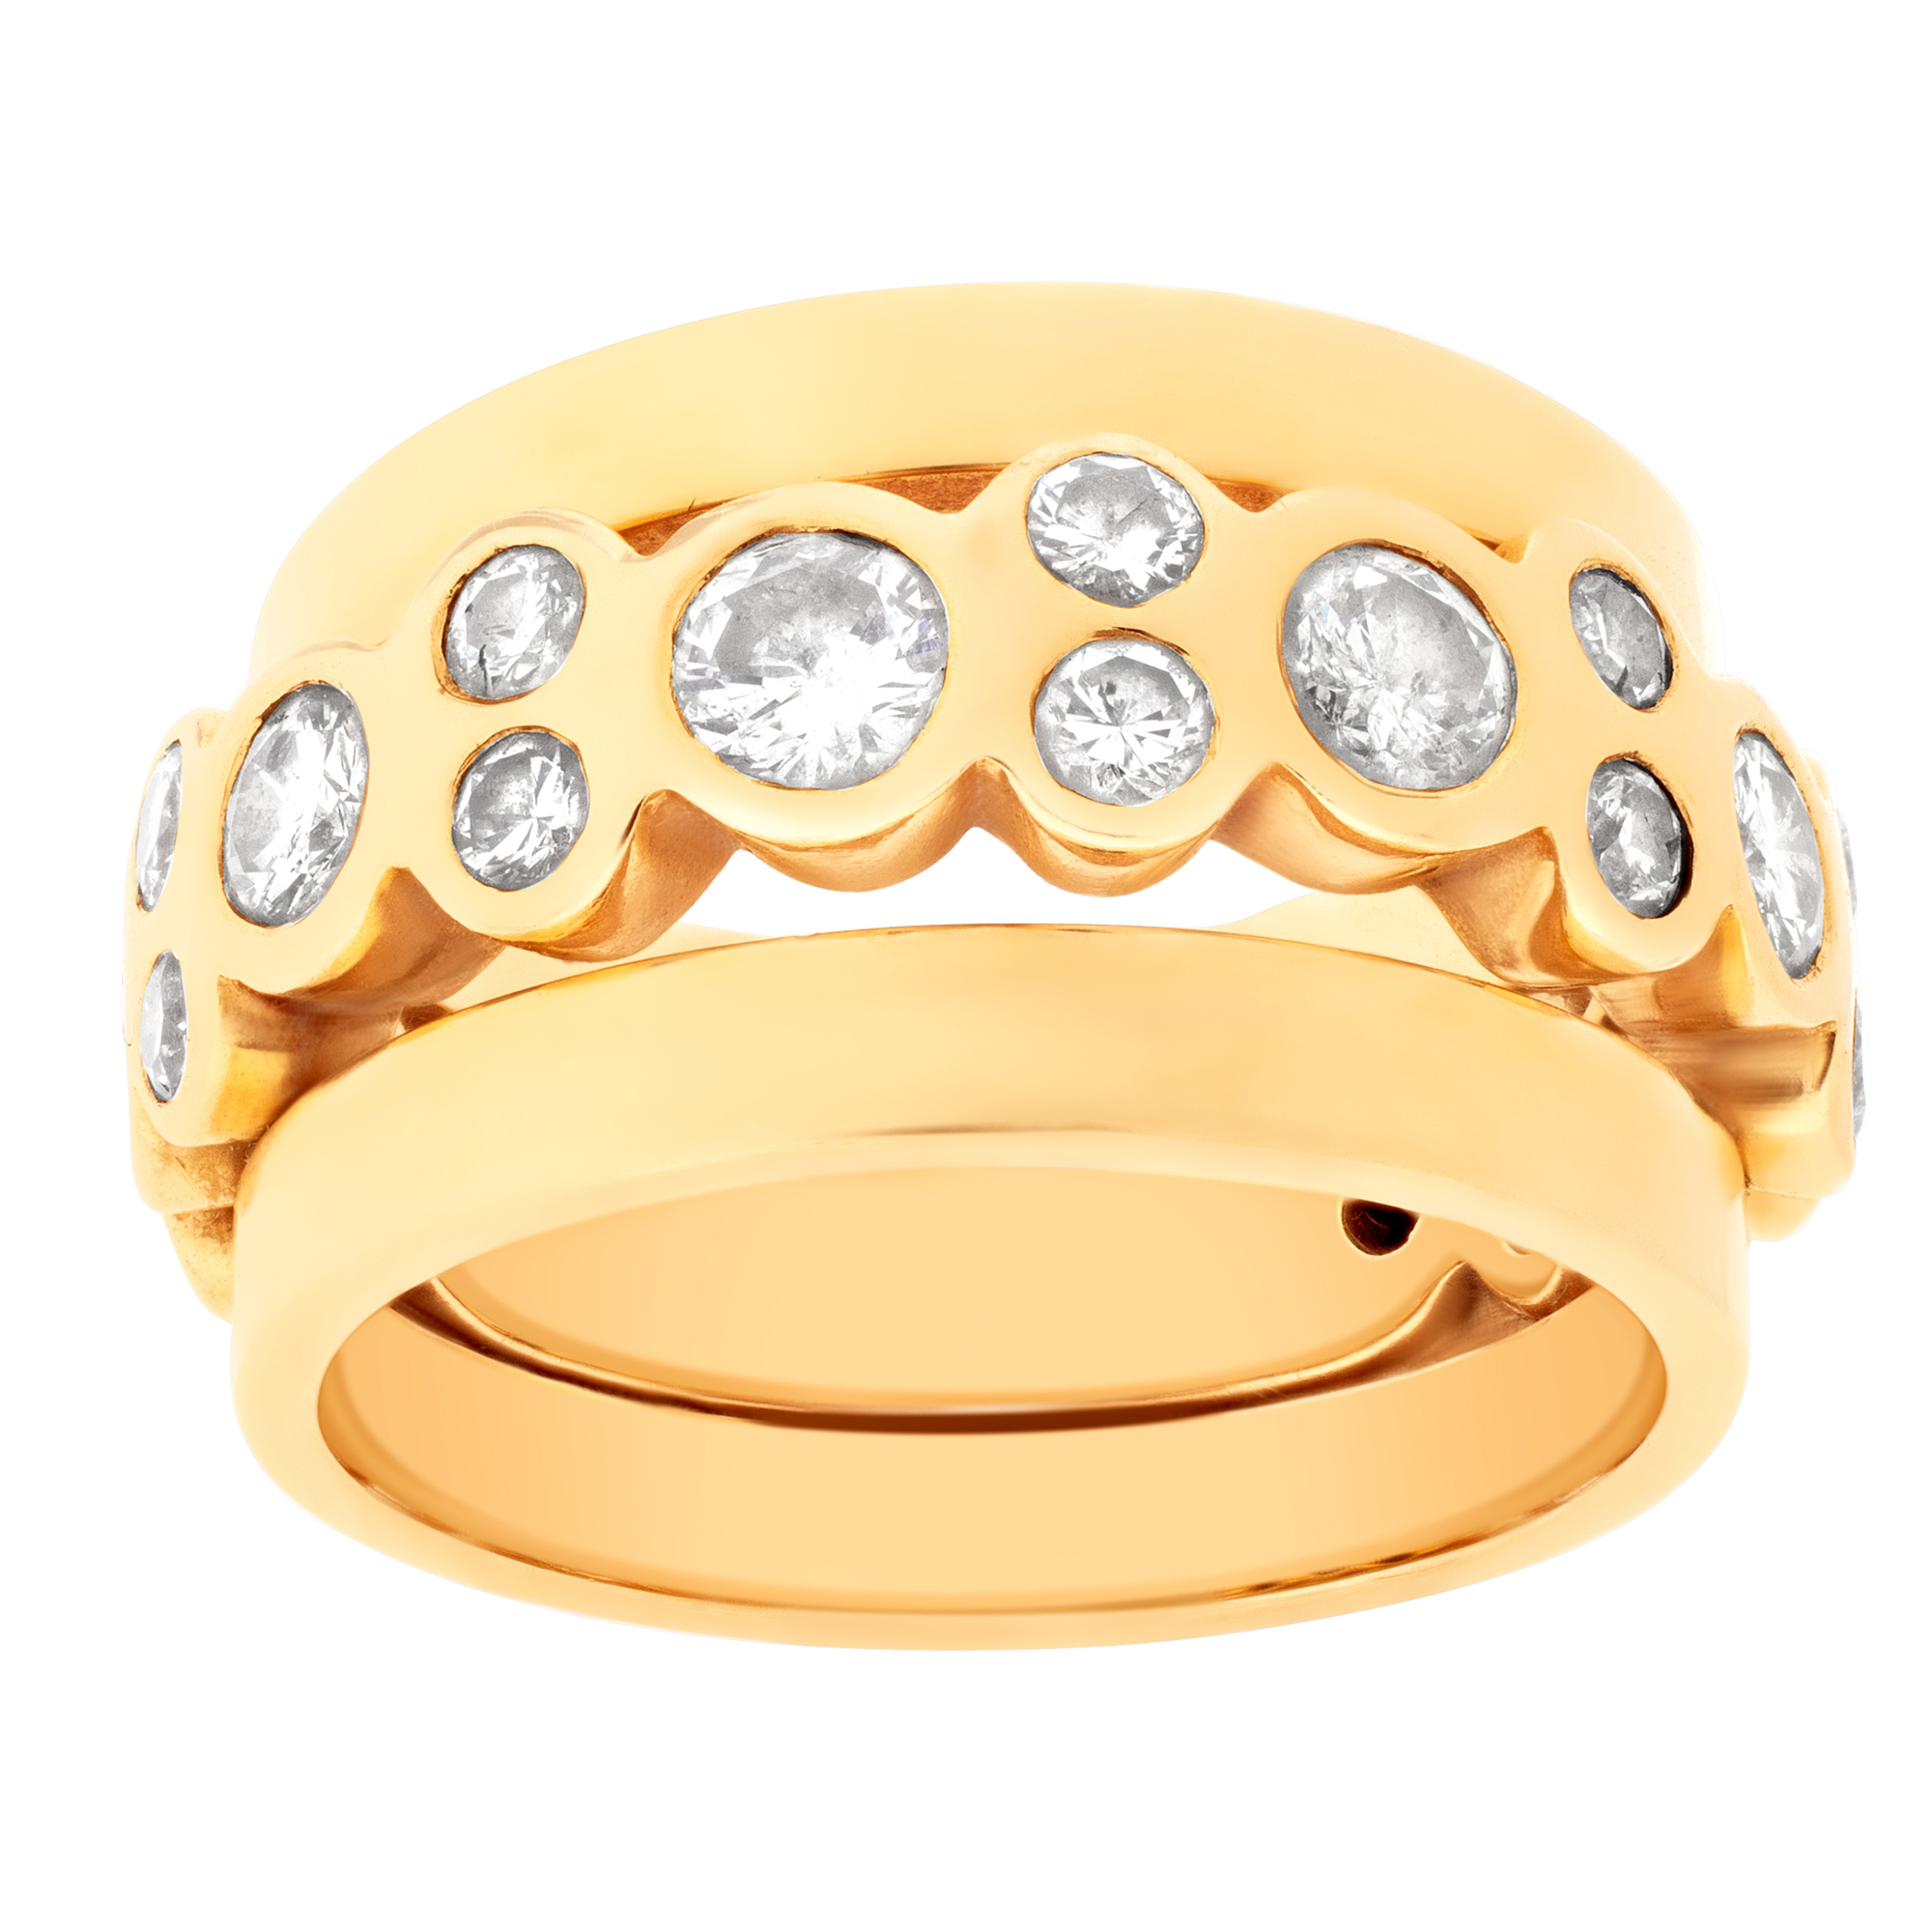 Diamonds & 18K yellow gold wide half eternity band. Approximately 1.50 carat full cut round brilliant bezeled set diamonds